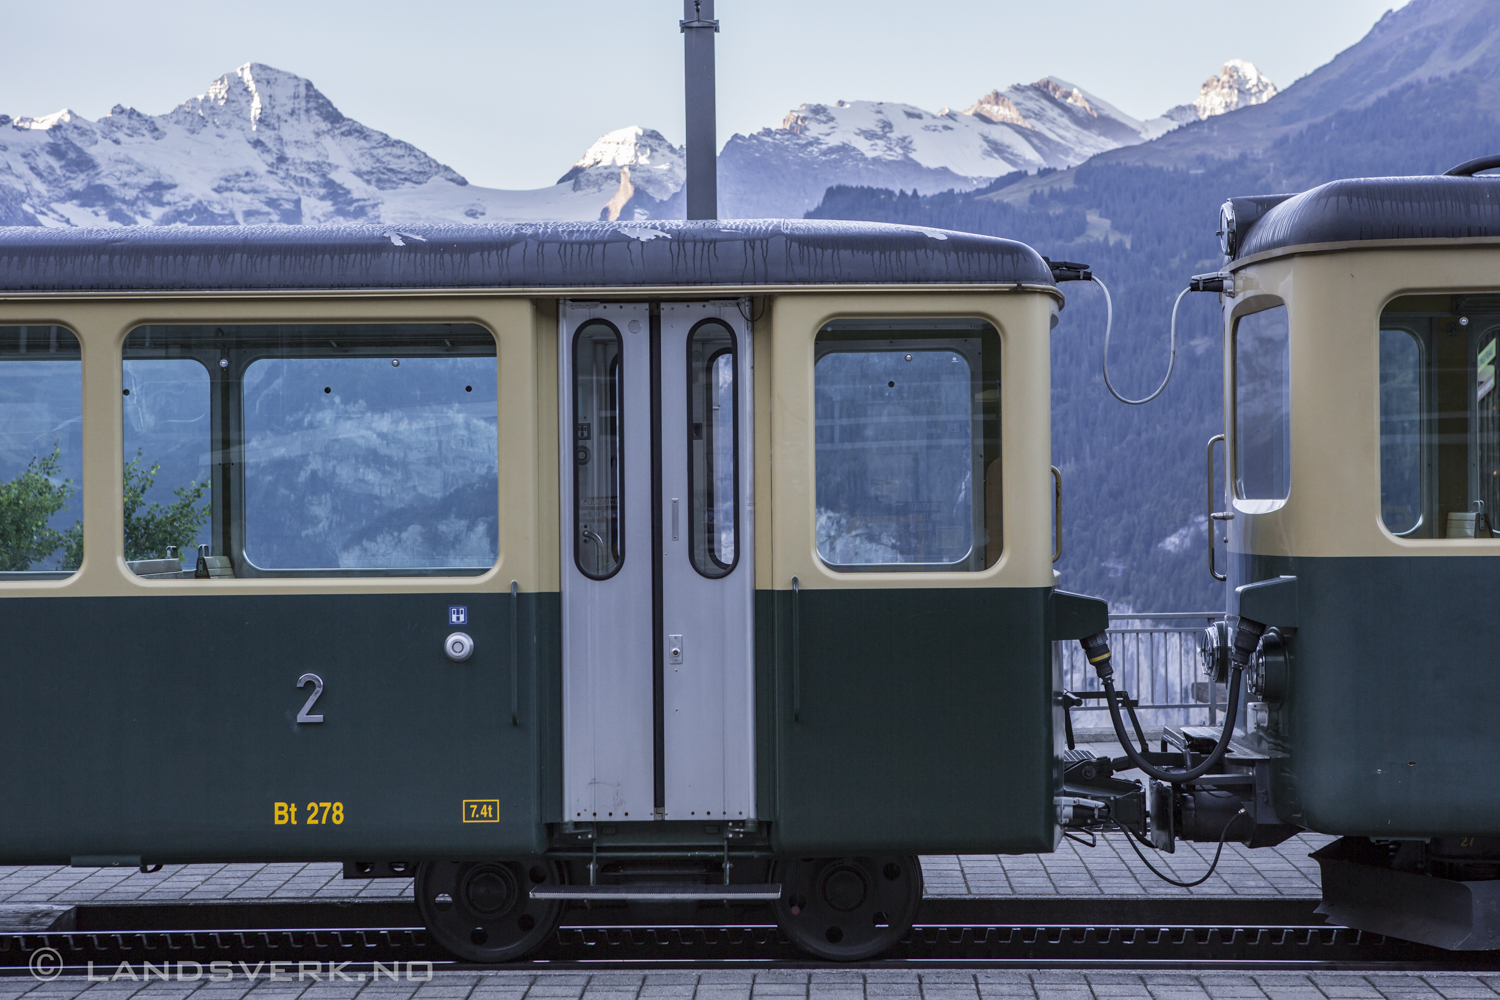 Wengen, Switzerland. 

(Canon EOS 5D Mark III / Canon EF 24-70mm f/2.8 L USM)